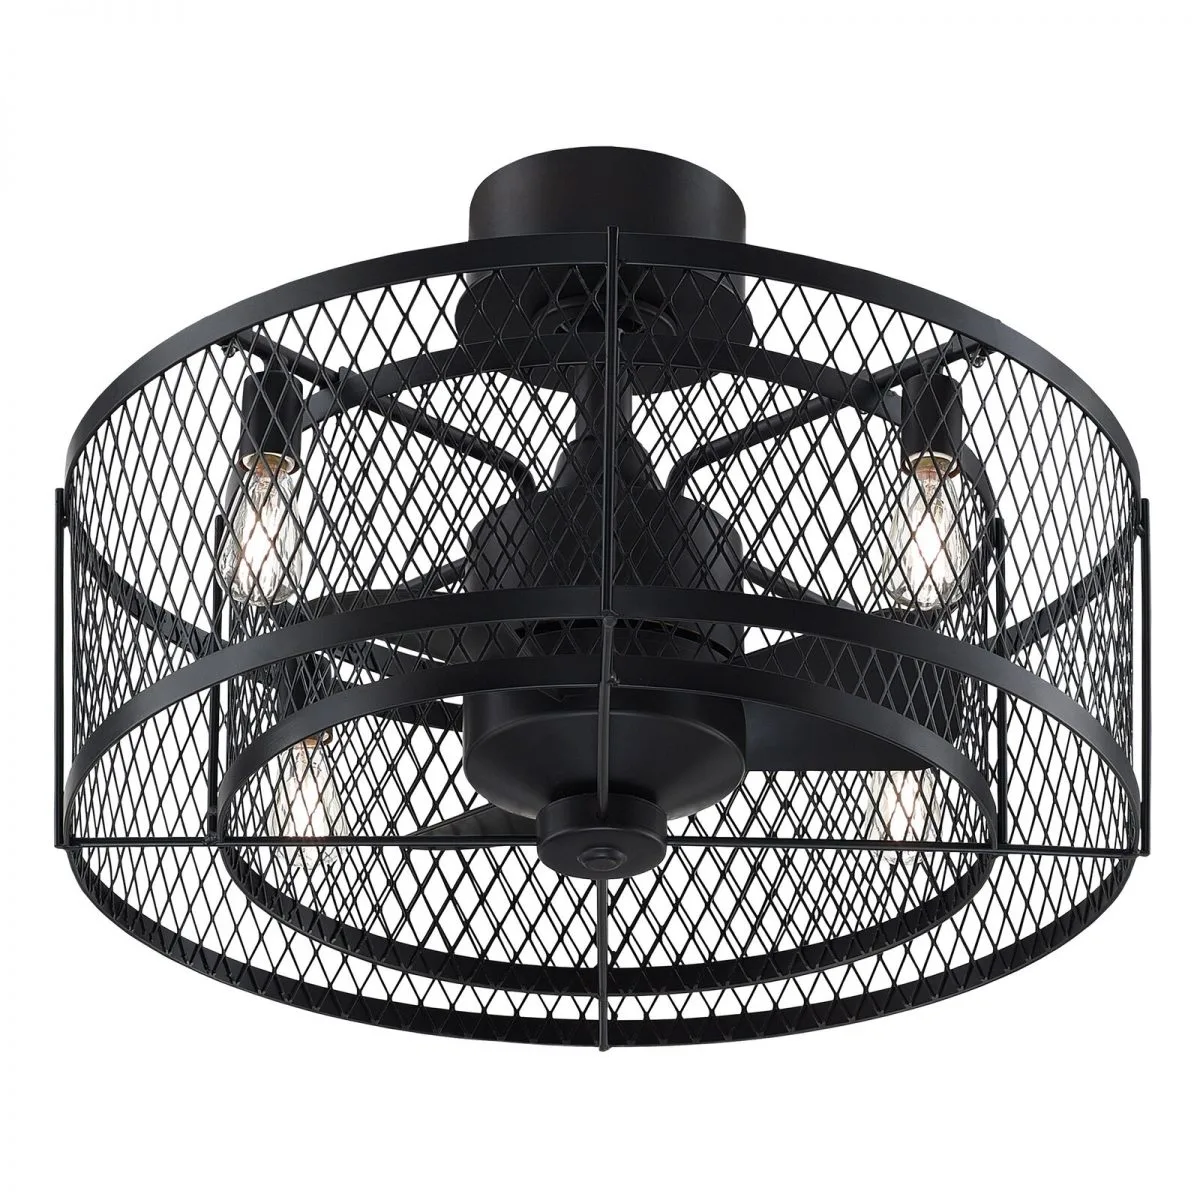 Affordable farmhouse ceiling fan unique metal rustic compact fan with remote color black